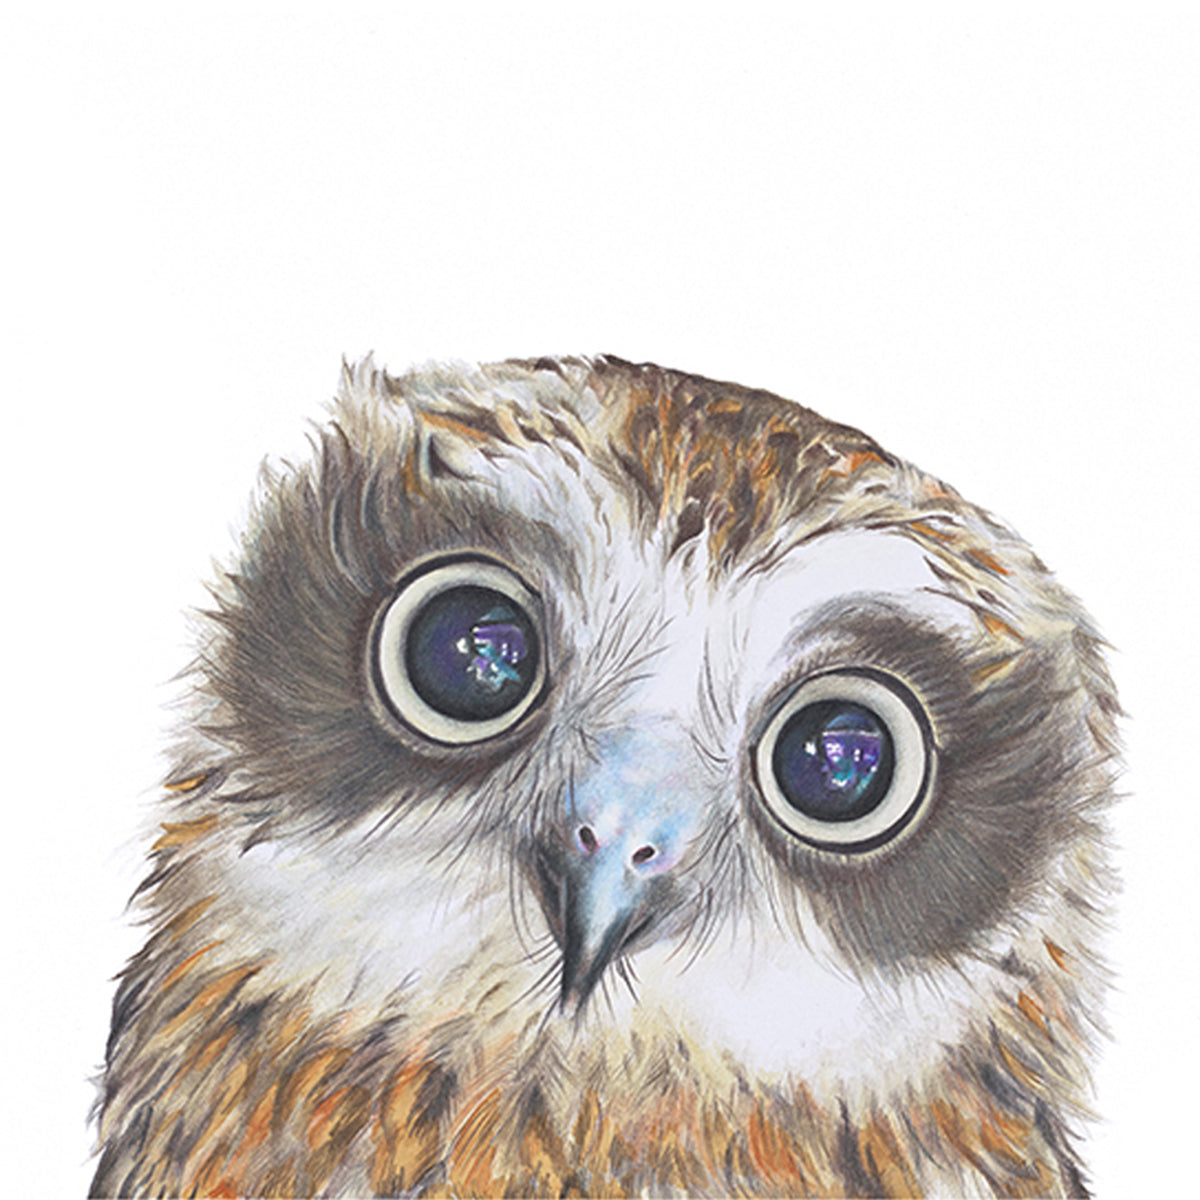 Boobook Owl Greeting Card